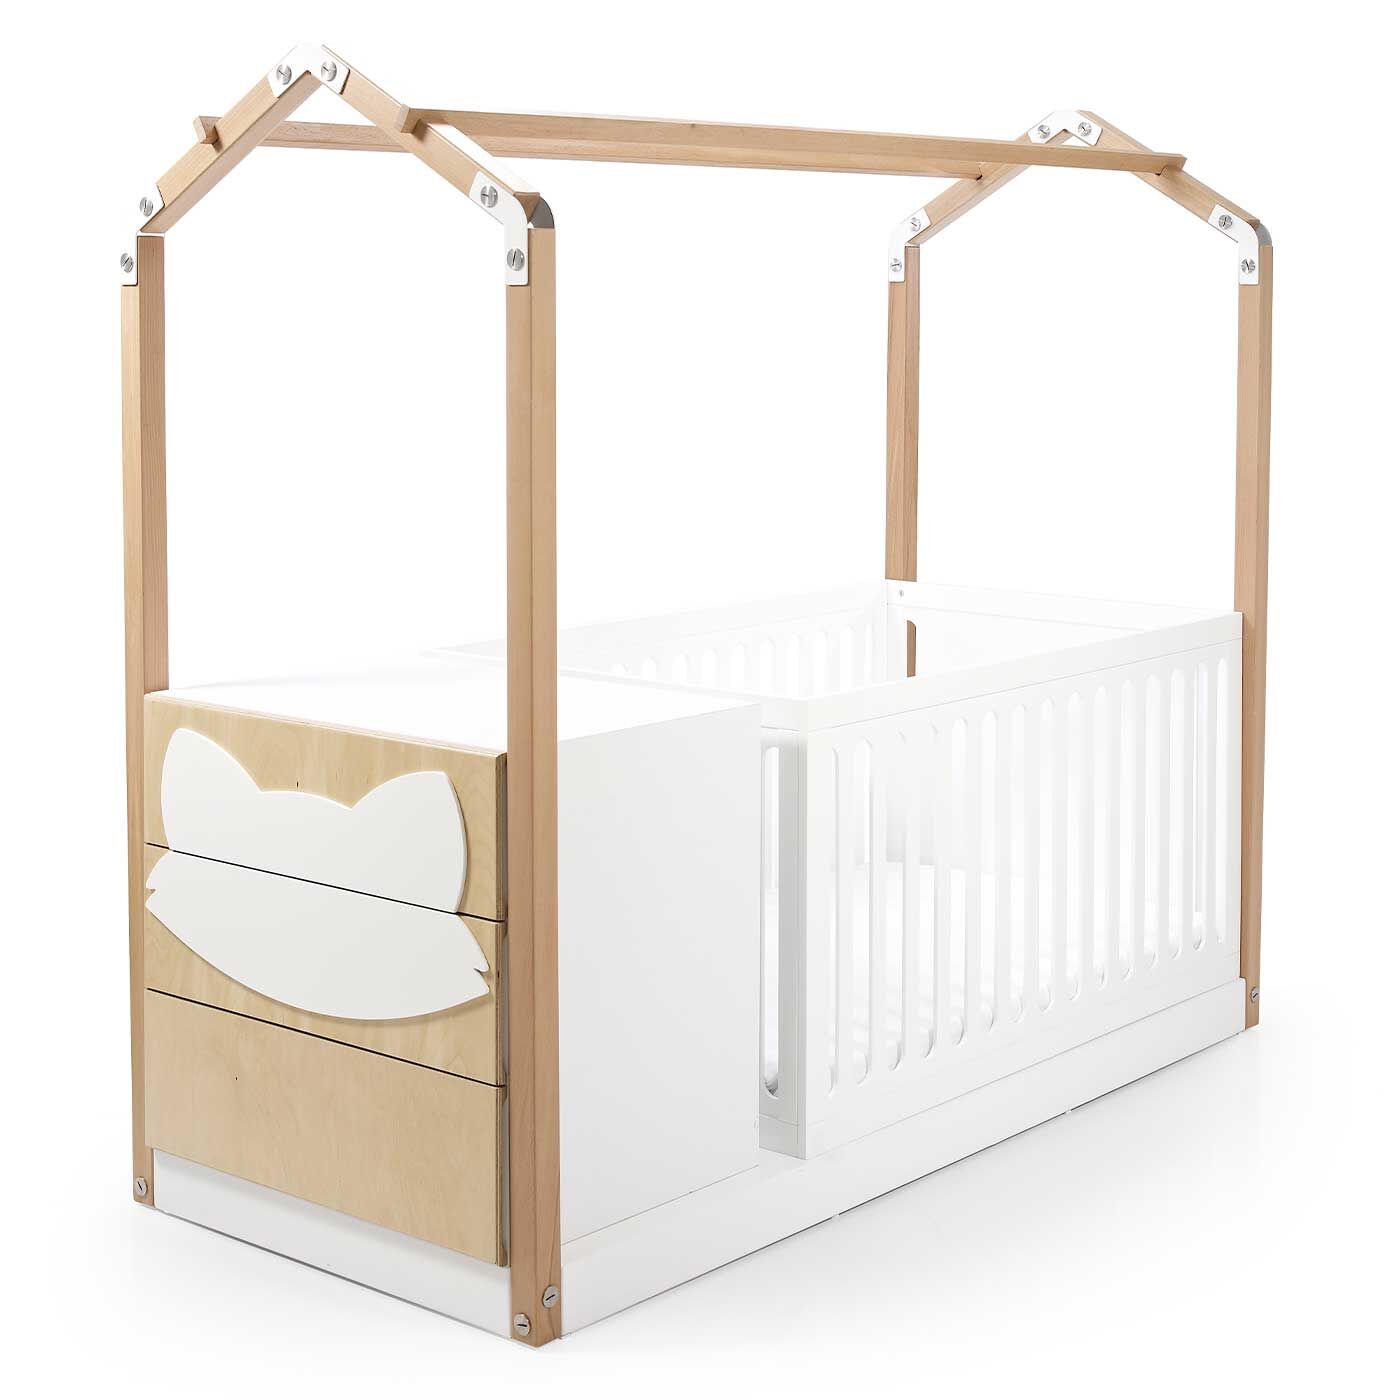 Casa E Crib Montessori Growing Baby Bed